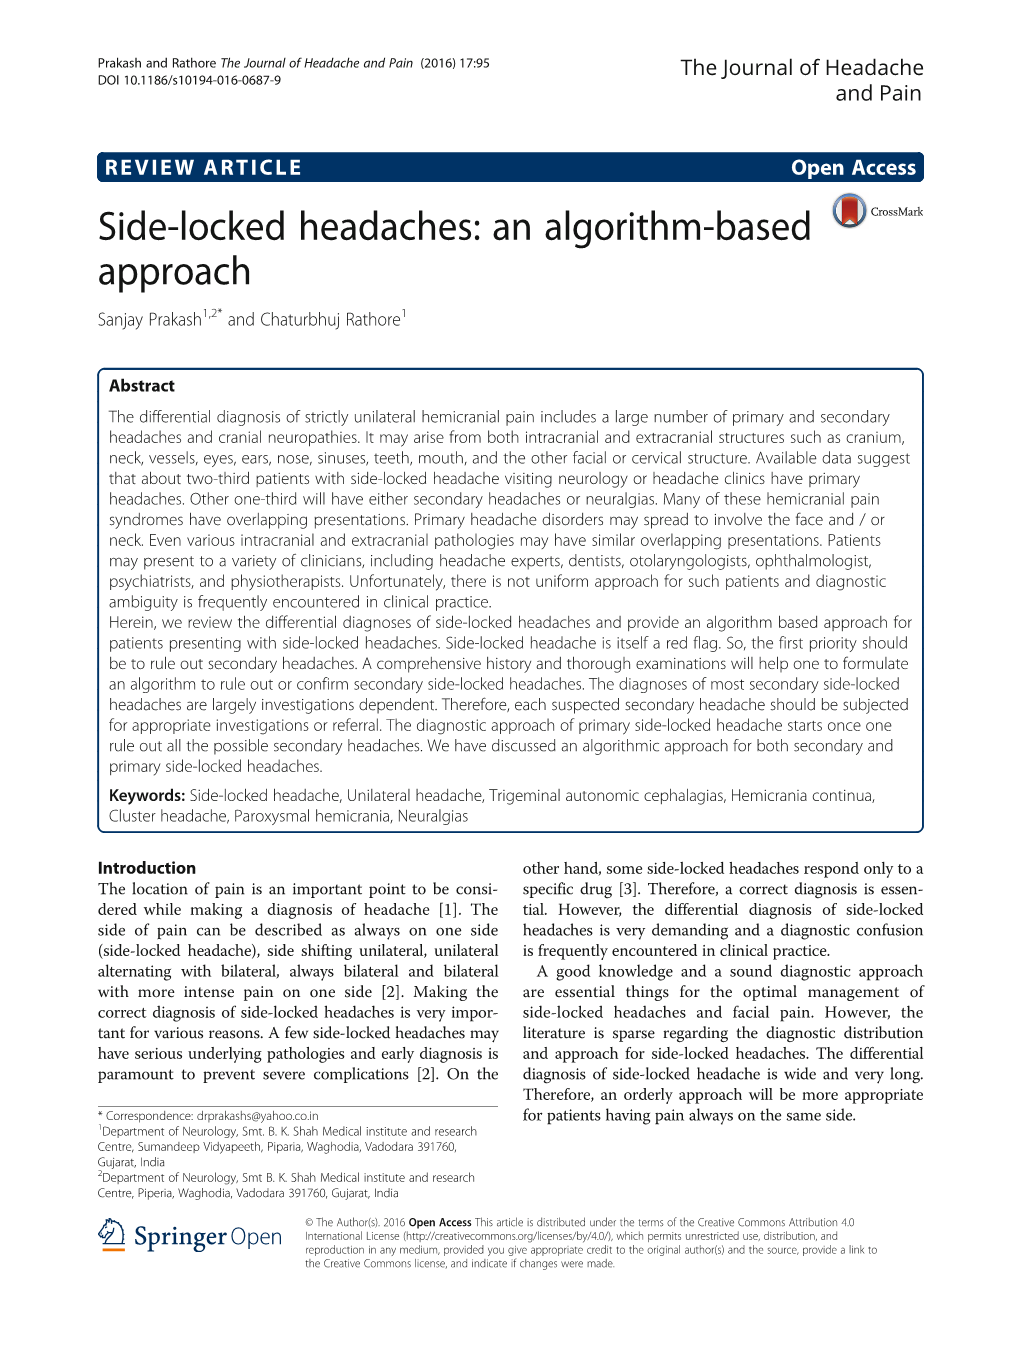 Side-Locked Headaches: an Algorithm-Based Approach Sanjay Prakash1,2* and Chaturbhuj Rathore1